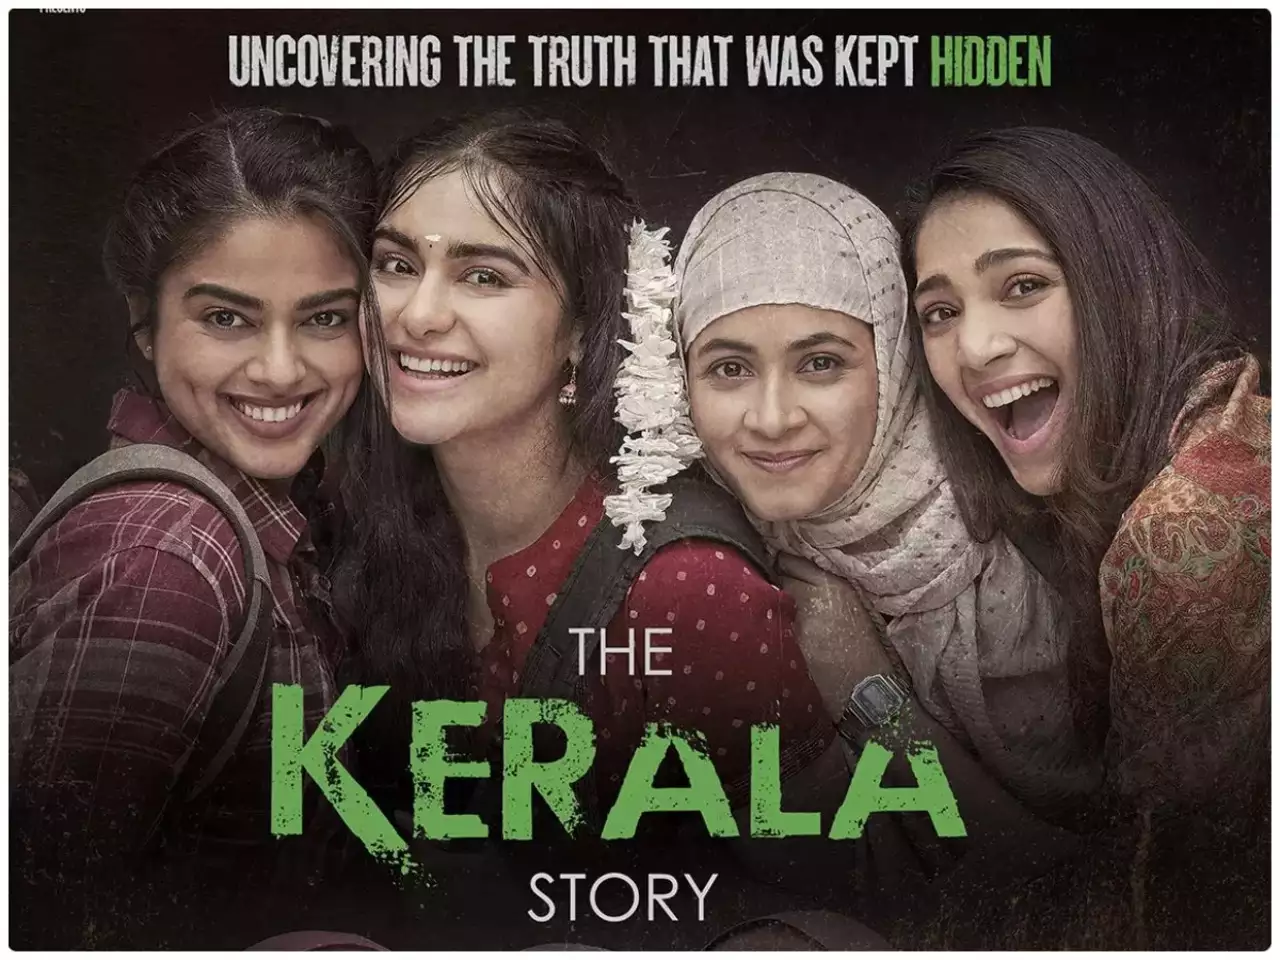 The Kerala Story
